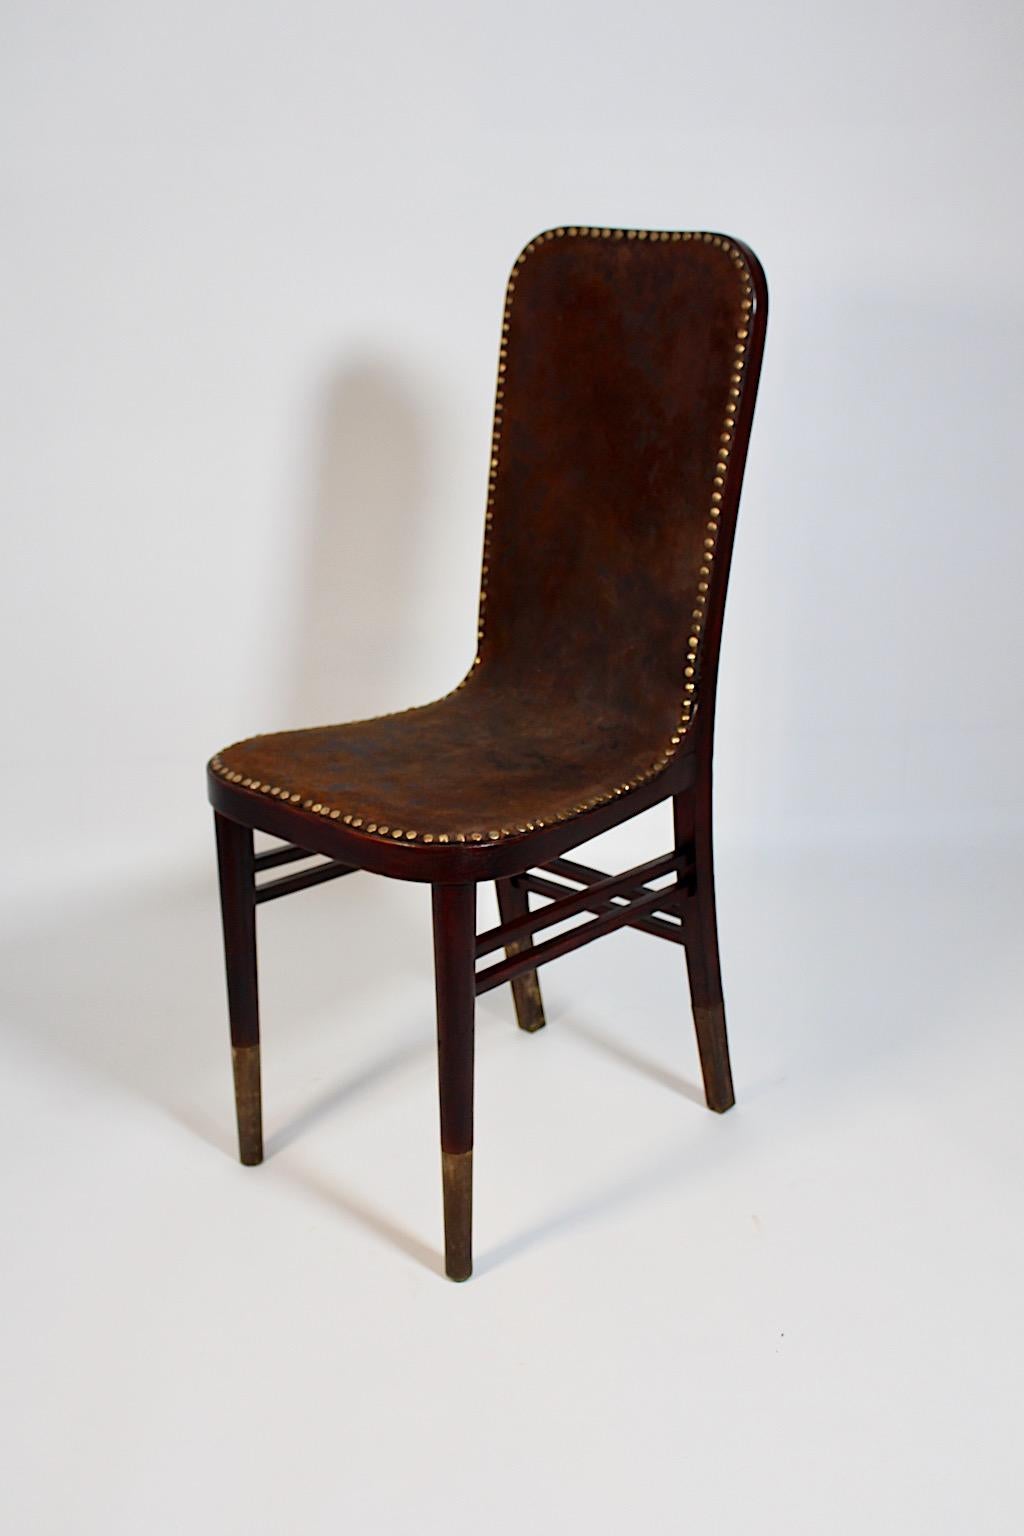 Jugendstil Side Chair Beech Leather by Joseph Urban Gebrüder Thonet 1903 Vienna For Sale 1